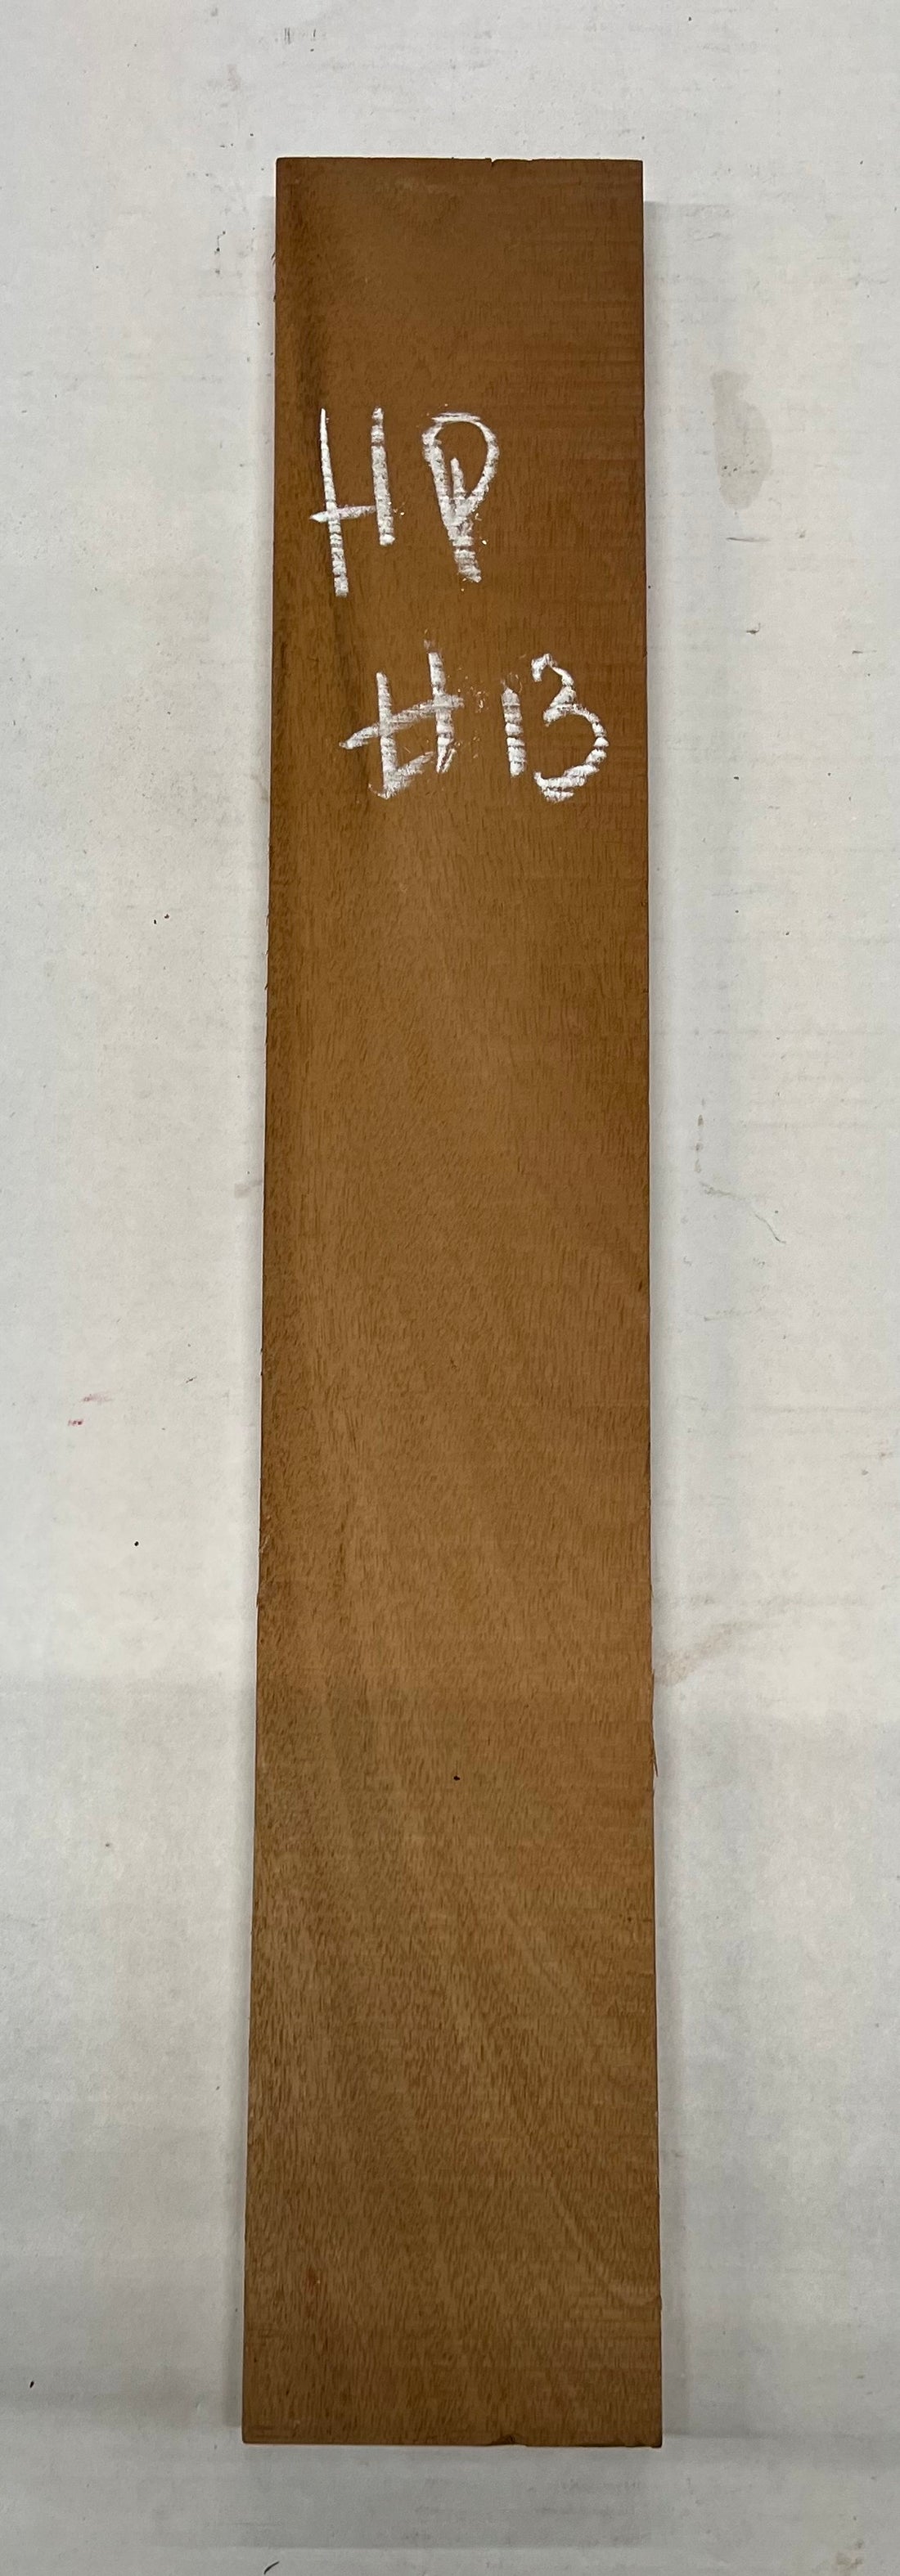 Spanish Cedar Thin Stock Three Dimensional Lumber Board 24&quot;x4&quot;x3/4&quot; 